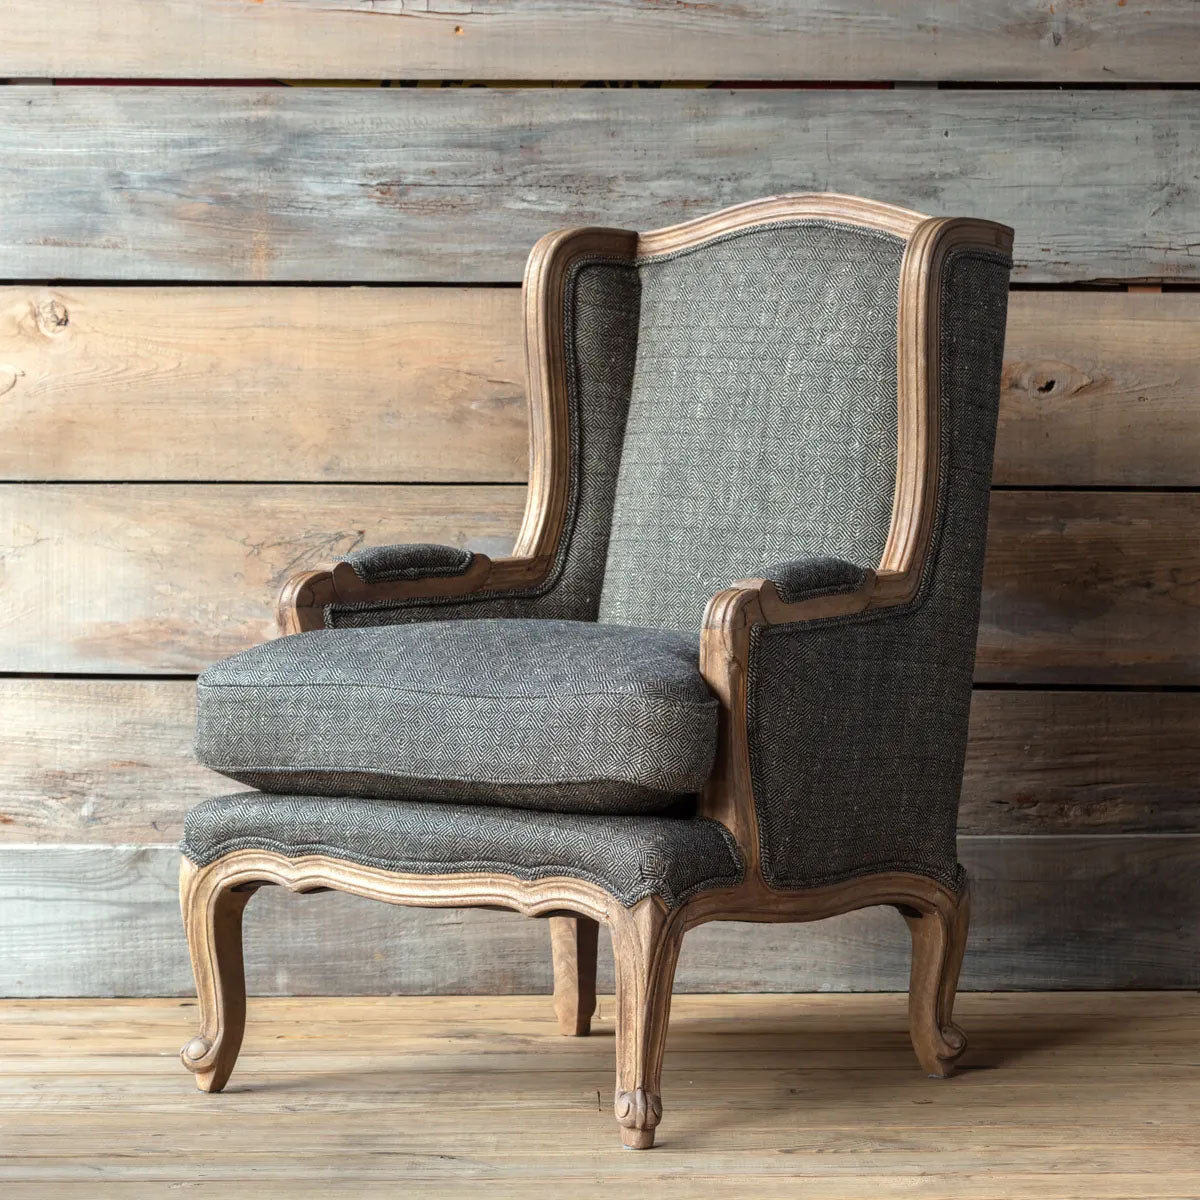 Charcoal Tweed Chair